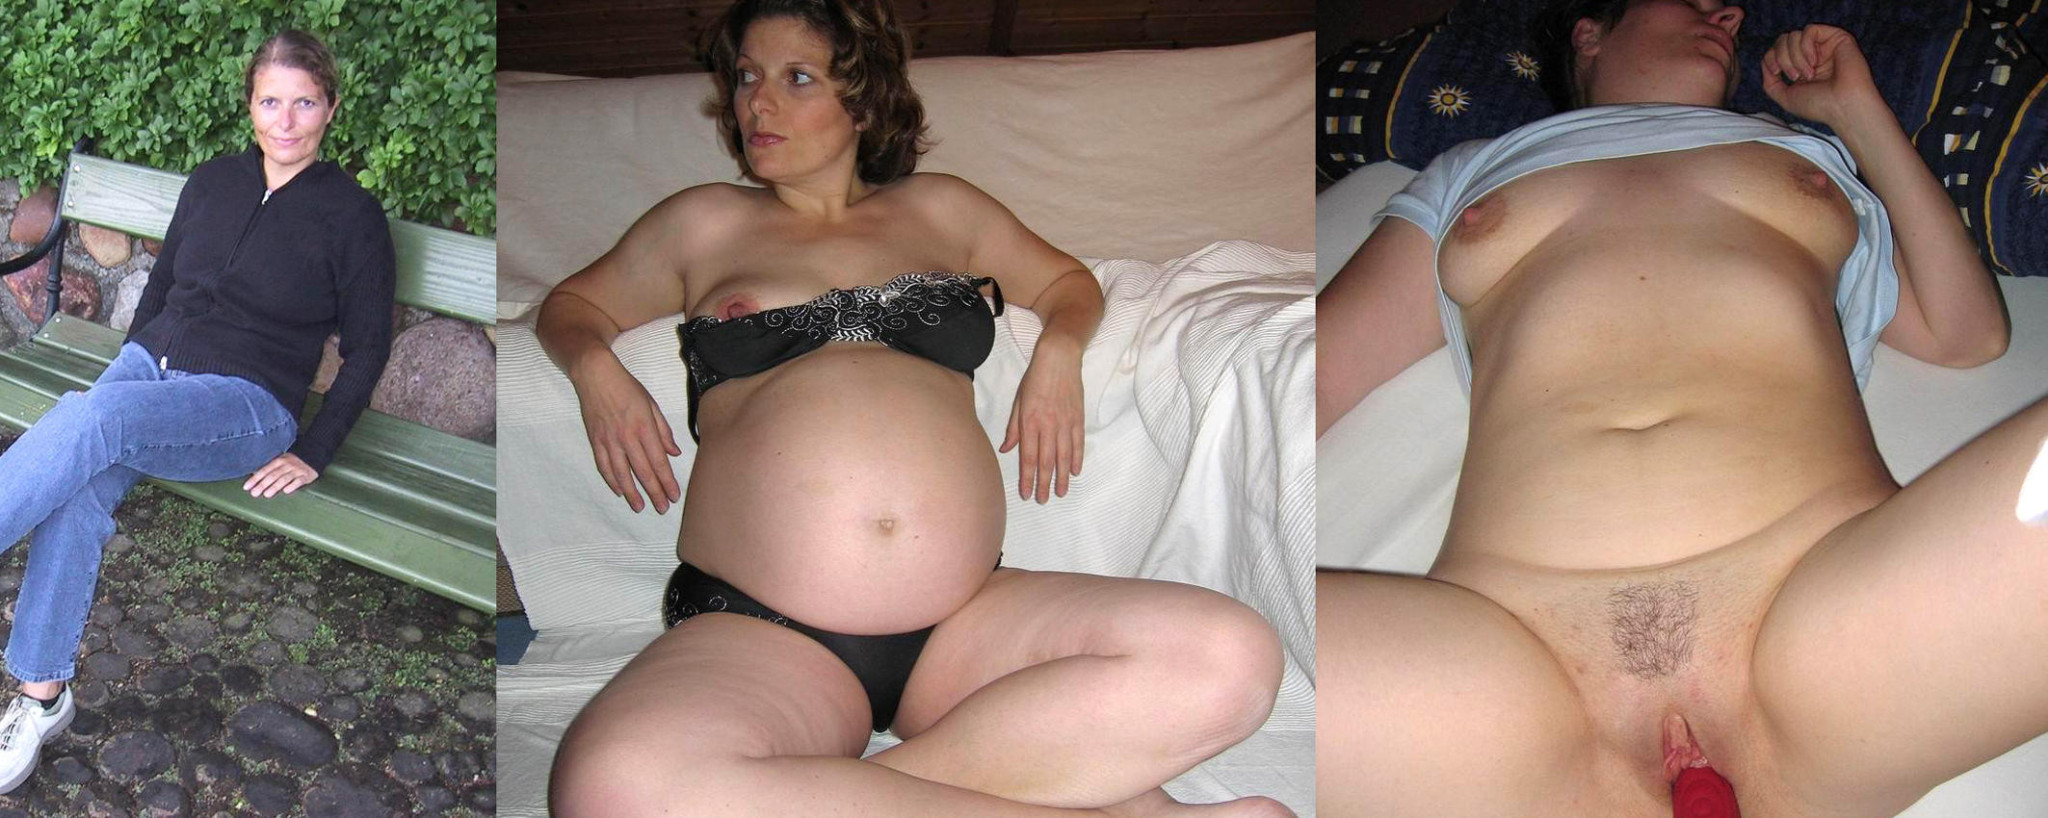 Chicas embarazadas fotos de pechos
 #67699650